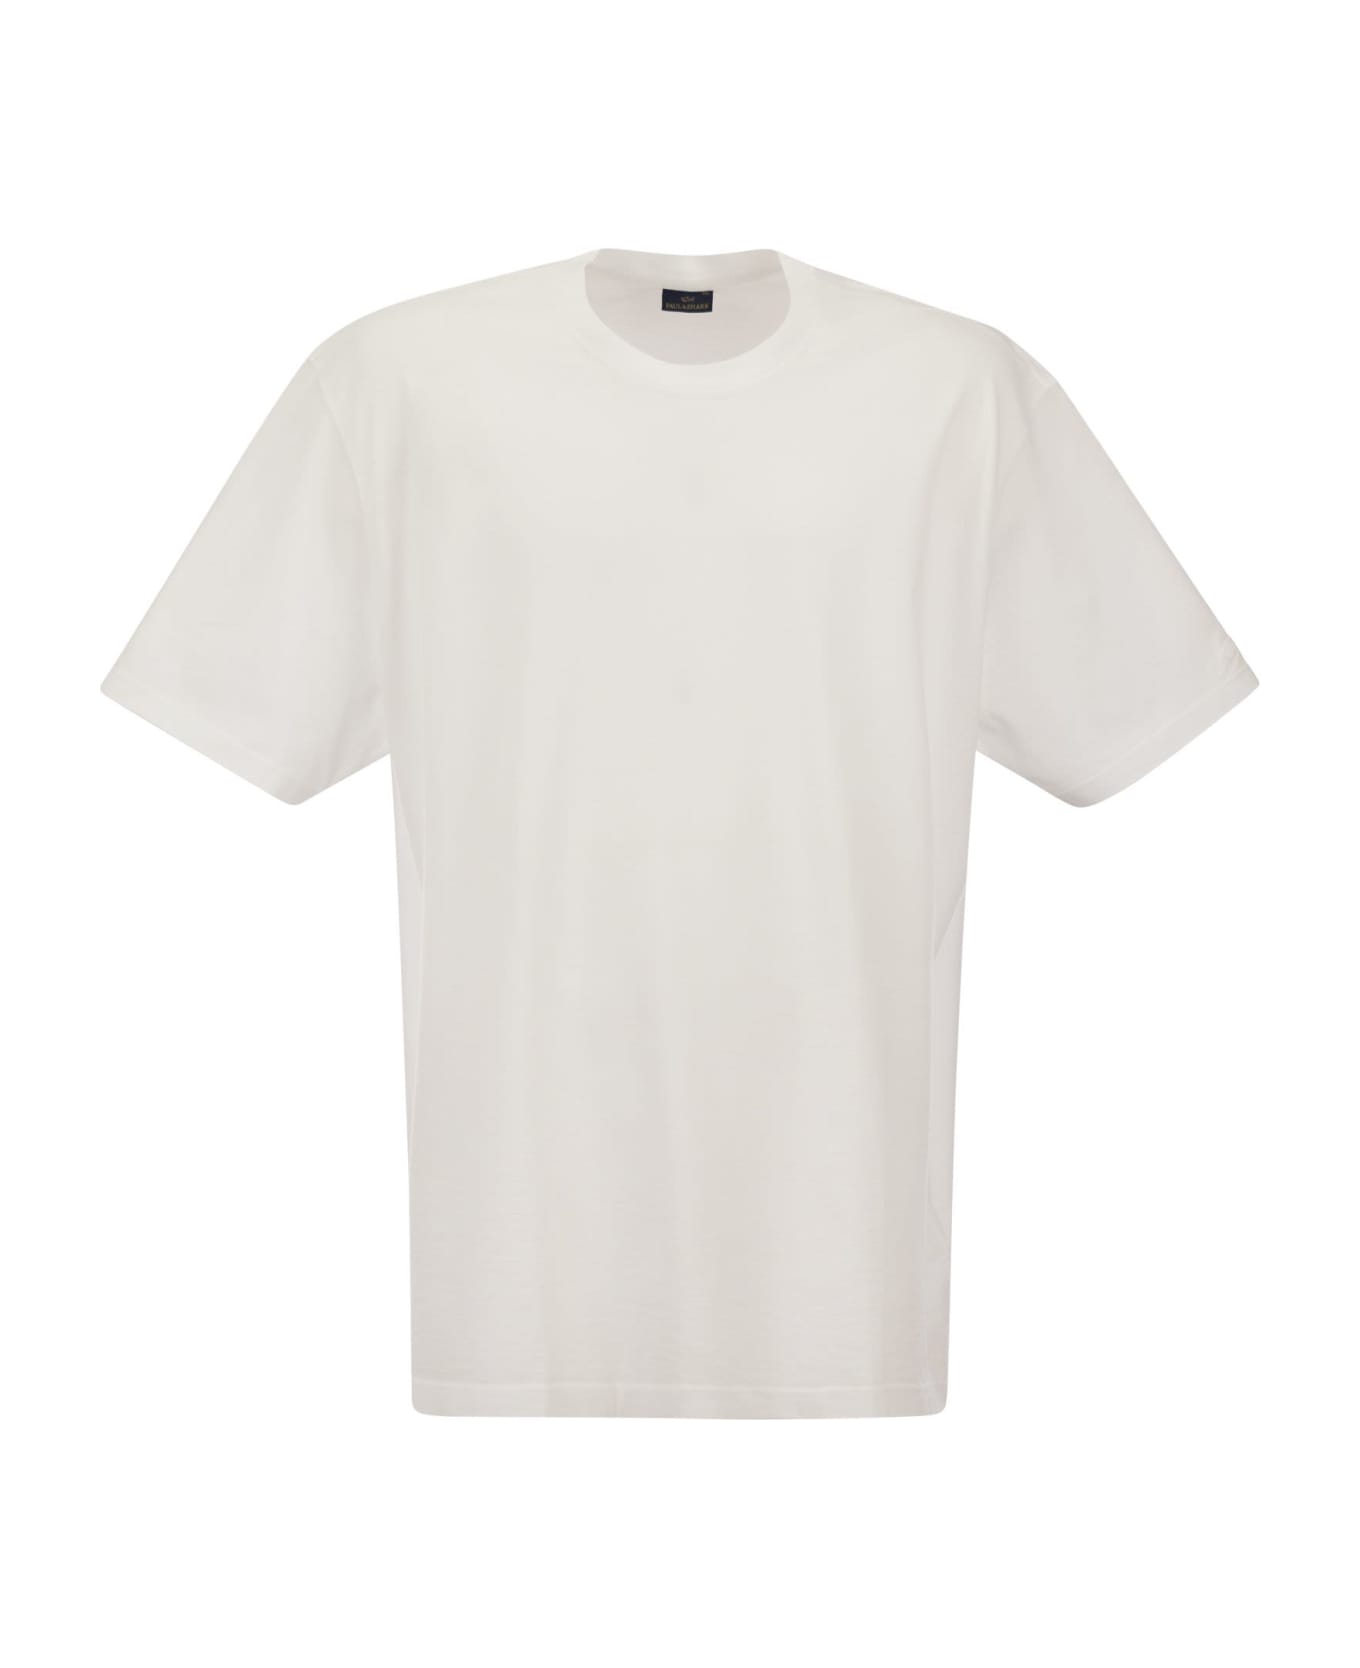 Paul&Shark Garment Dyed Cotton Jersey T-shirt - White シャツ